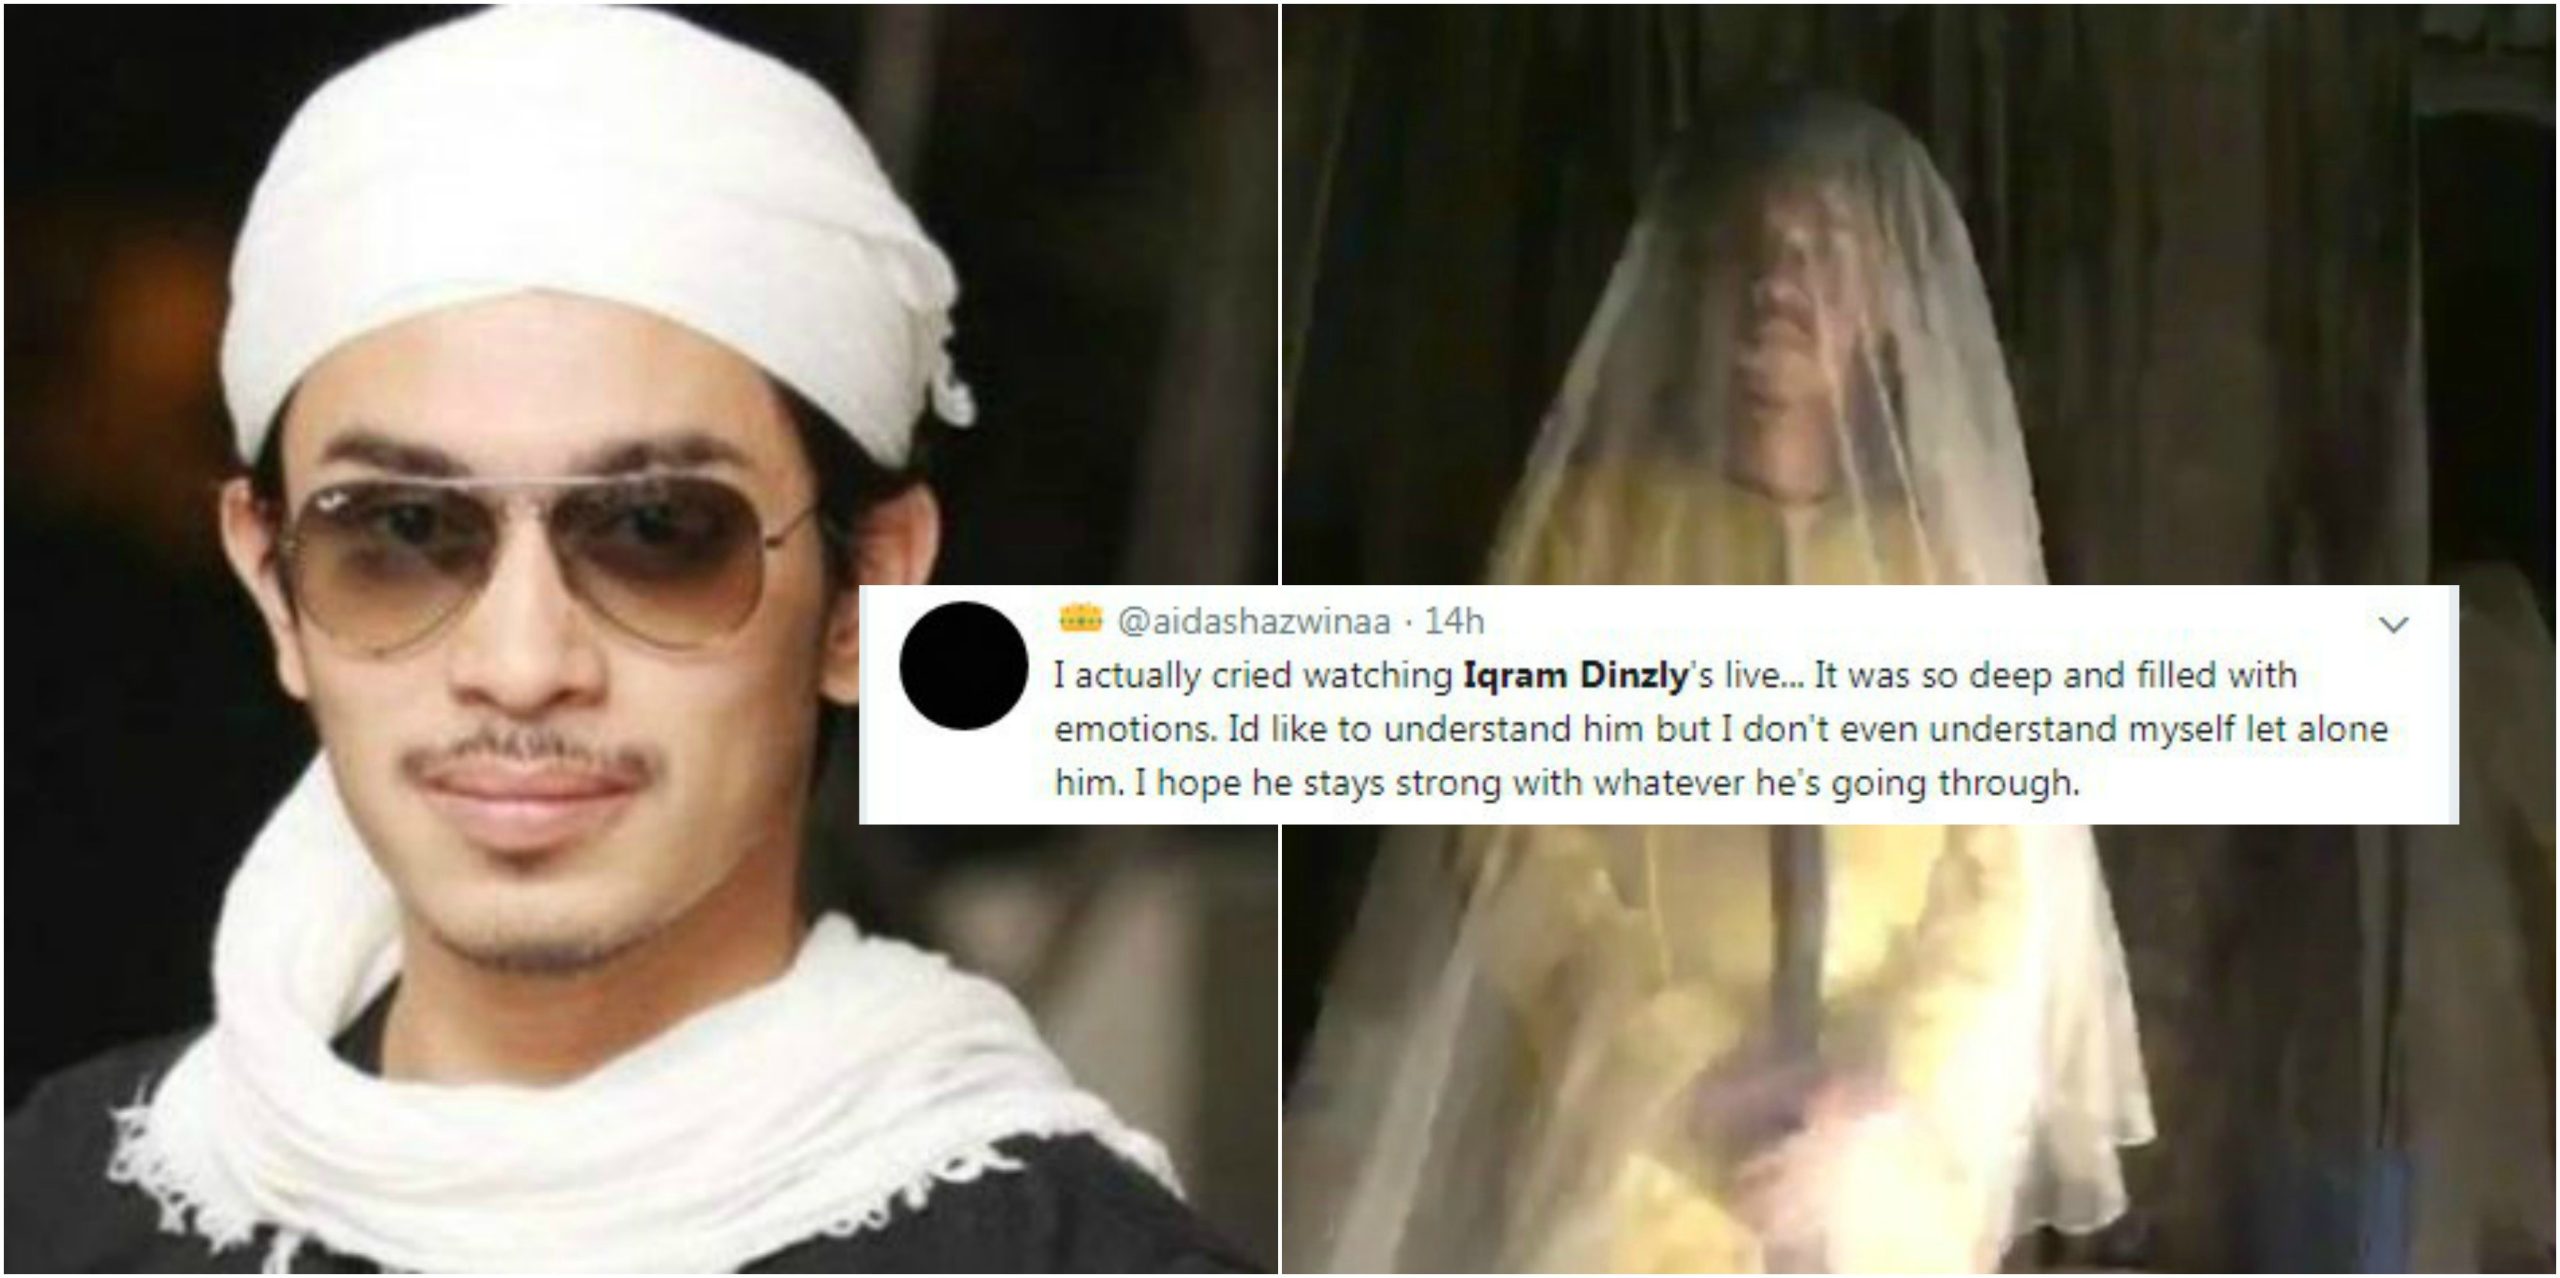 ‘I Actually Cried Watching Him’ – Lagi Perangai Pelik Di Instagram, Peminat Risau Iqram Dinzly Alami Kemurungan